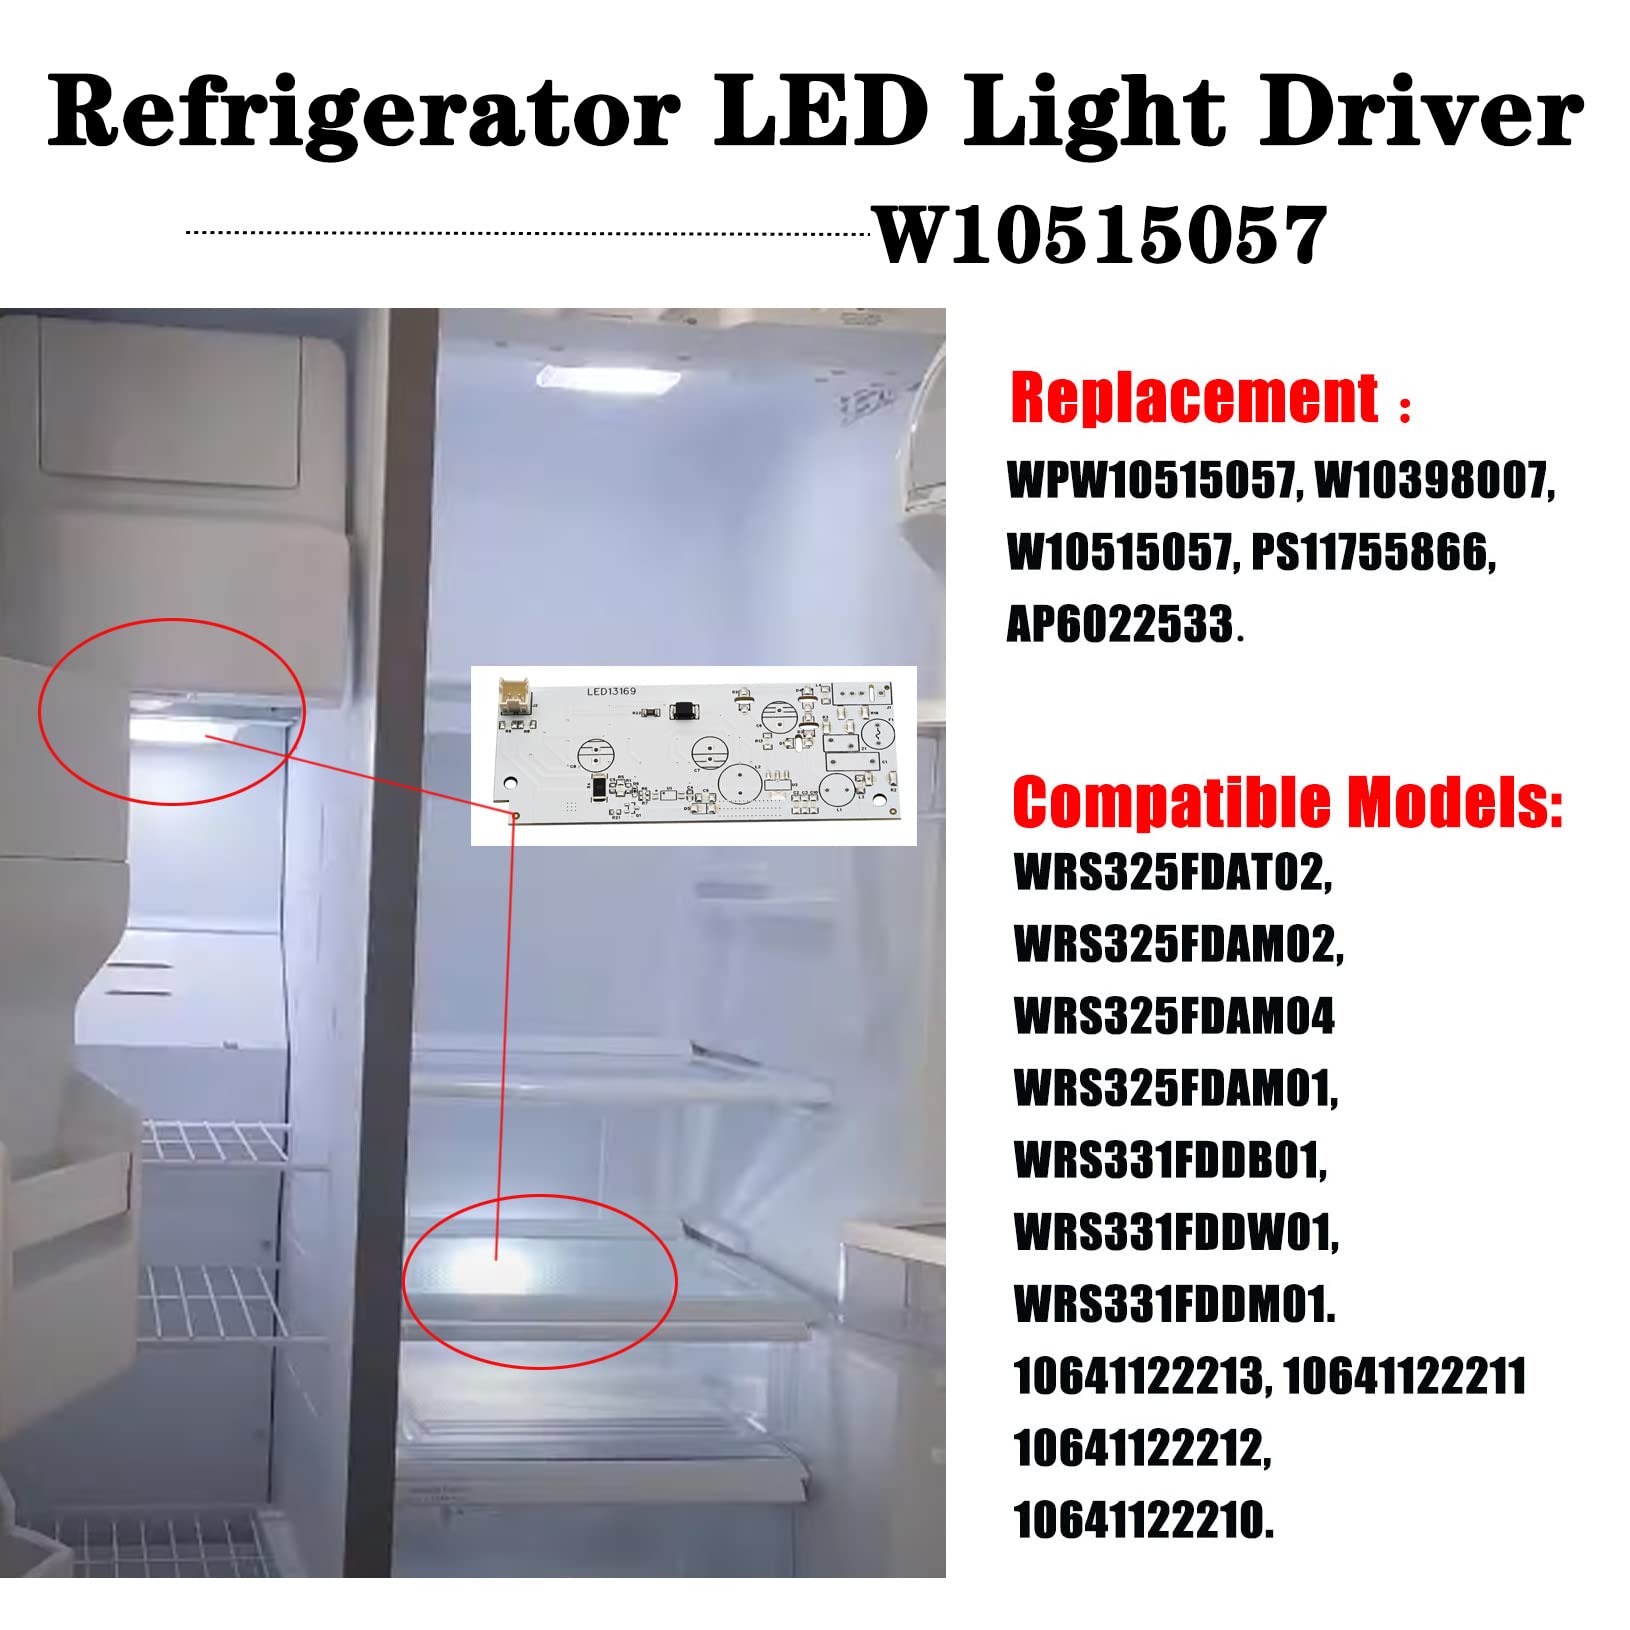 Bydorunce W10515057 W10515058 Refrigerator LED Light Driver Replacement for Refrigerator Freezer LED Light Part No Plastic Cover (2pcs W10515057 Side Light + 1pcs W10515058 Main Light)